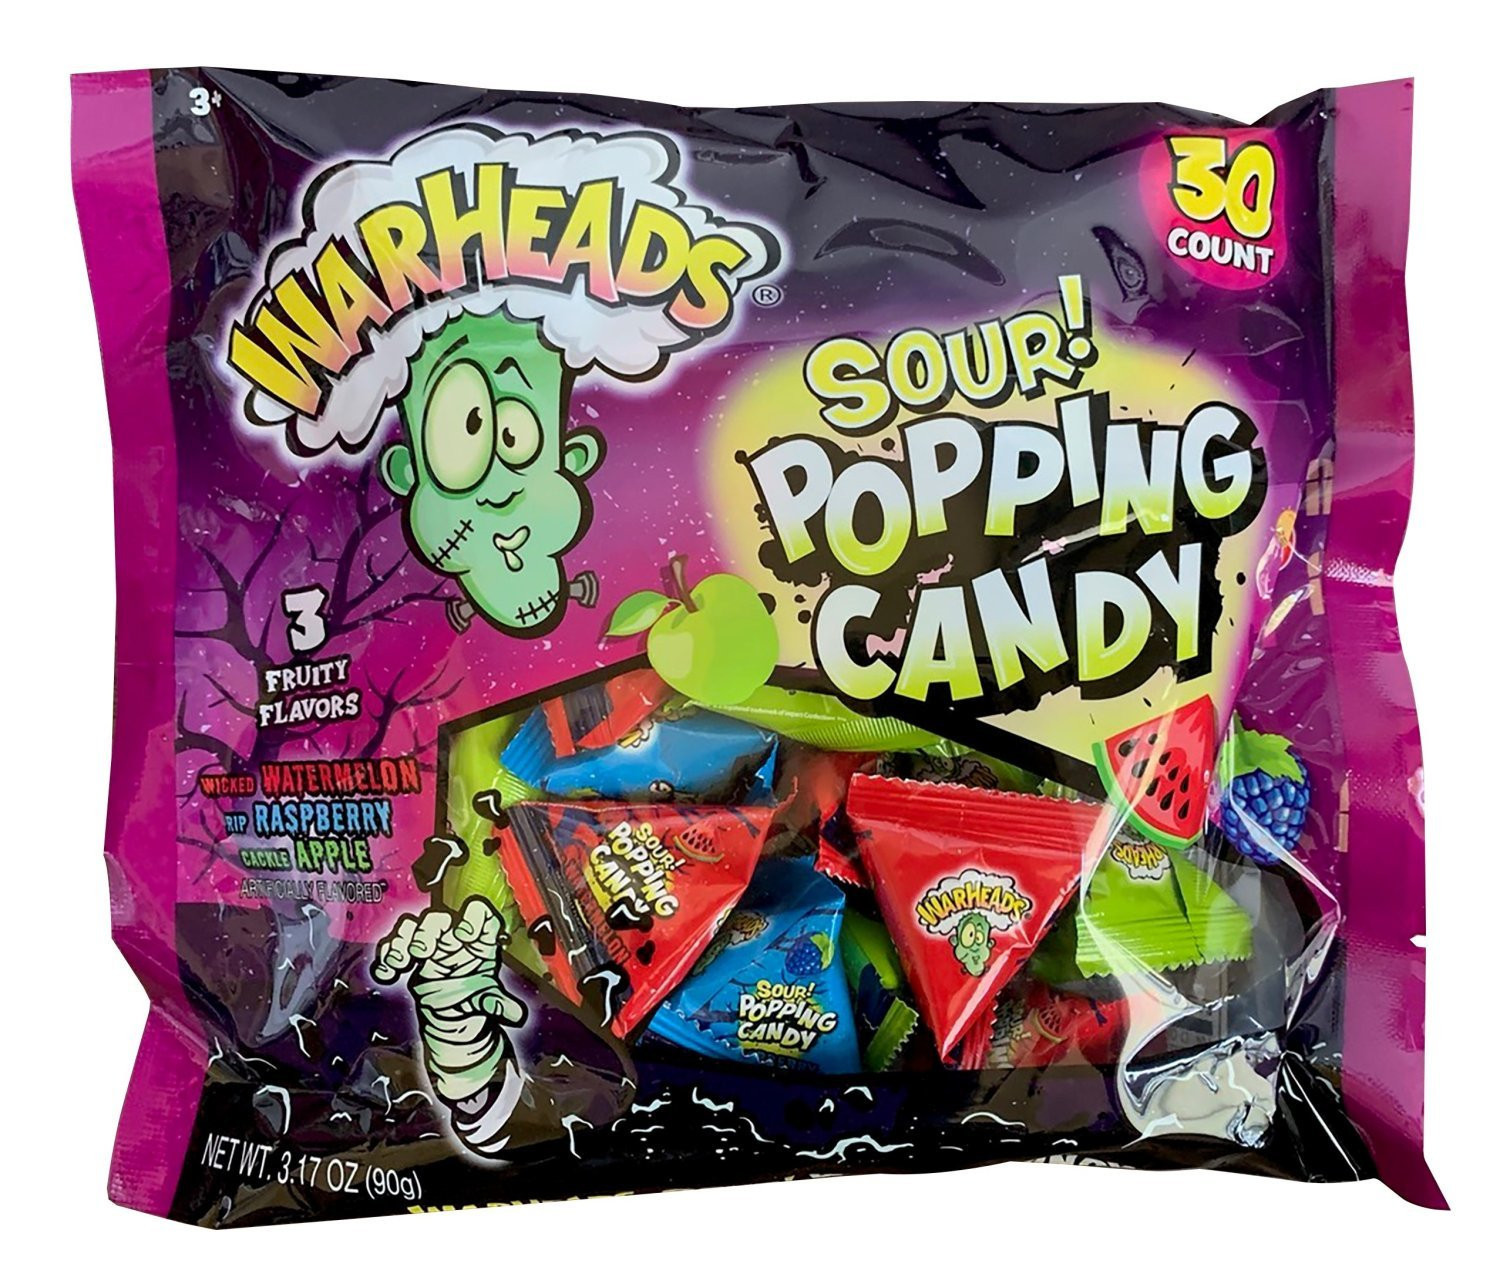 WarHeads WarHeads Halloween 30ct. Popping Candy Laydown Bag 3.17oz.